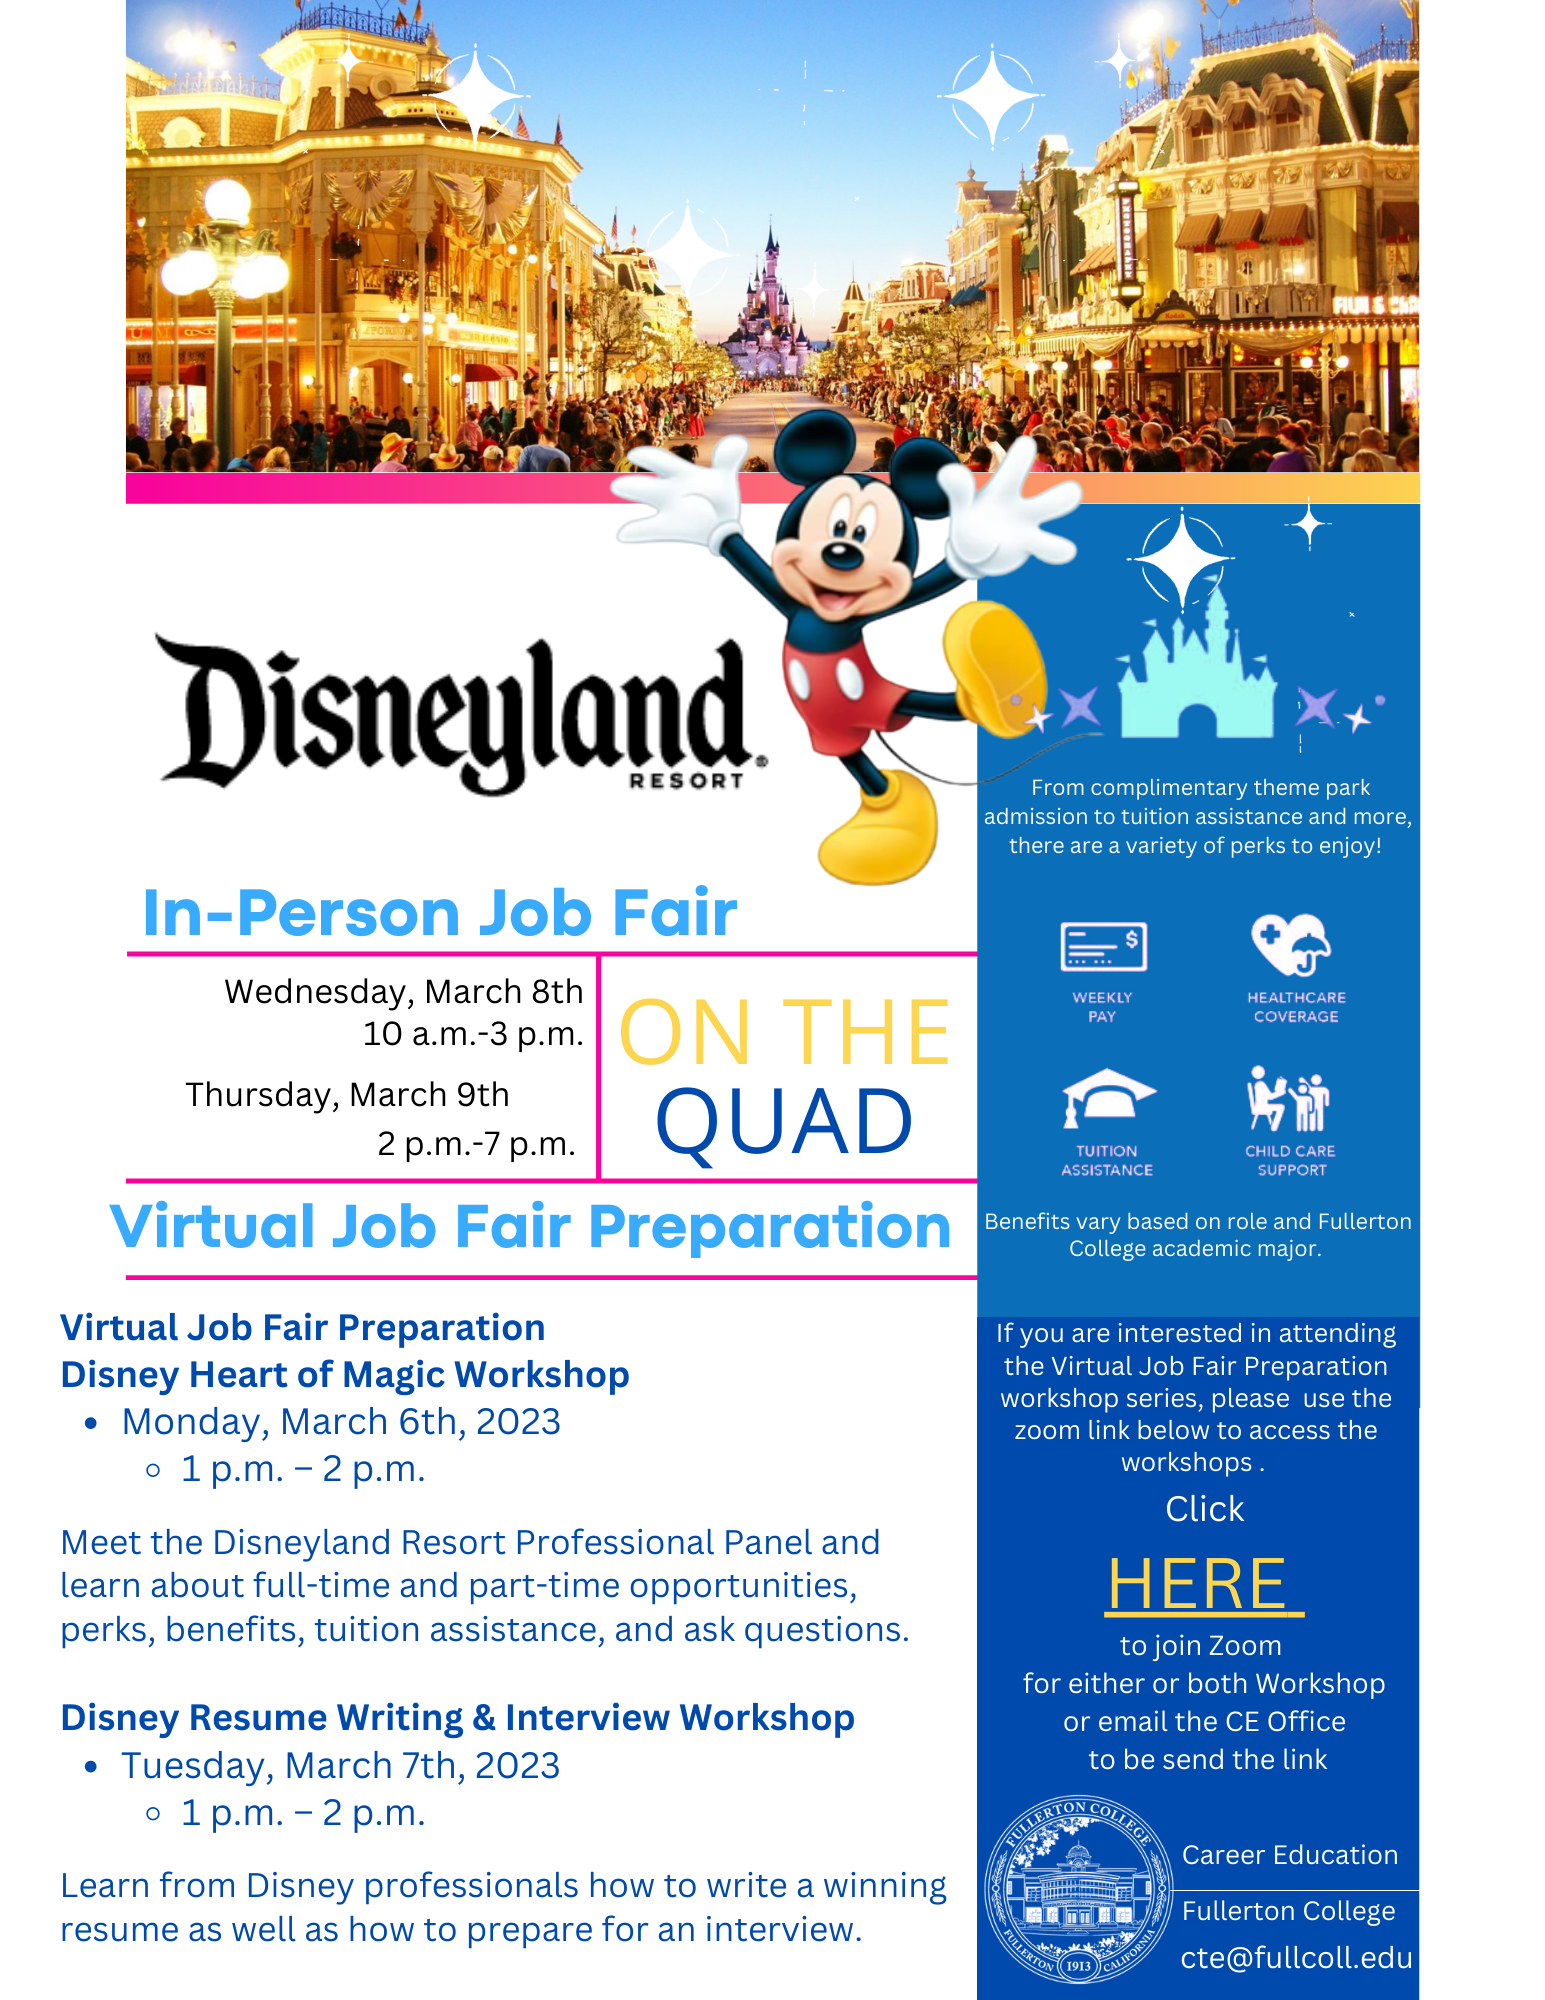 DisneyJobFair Career Education